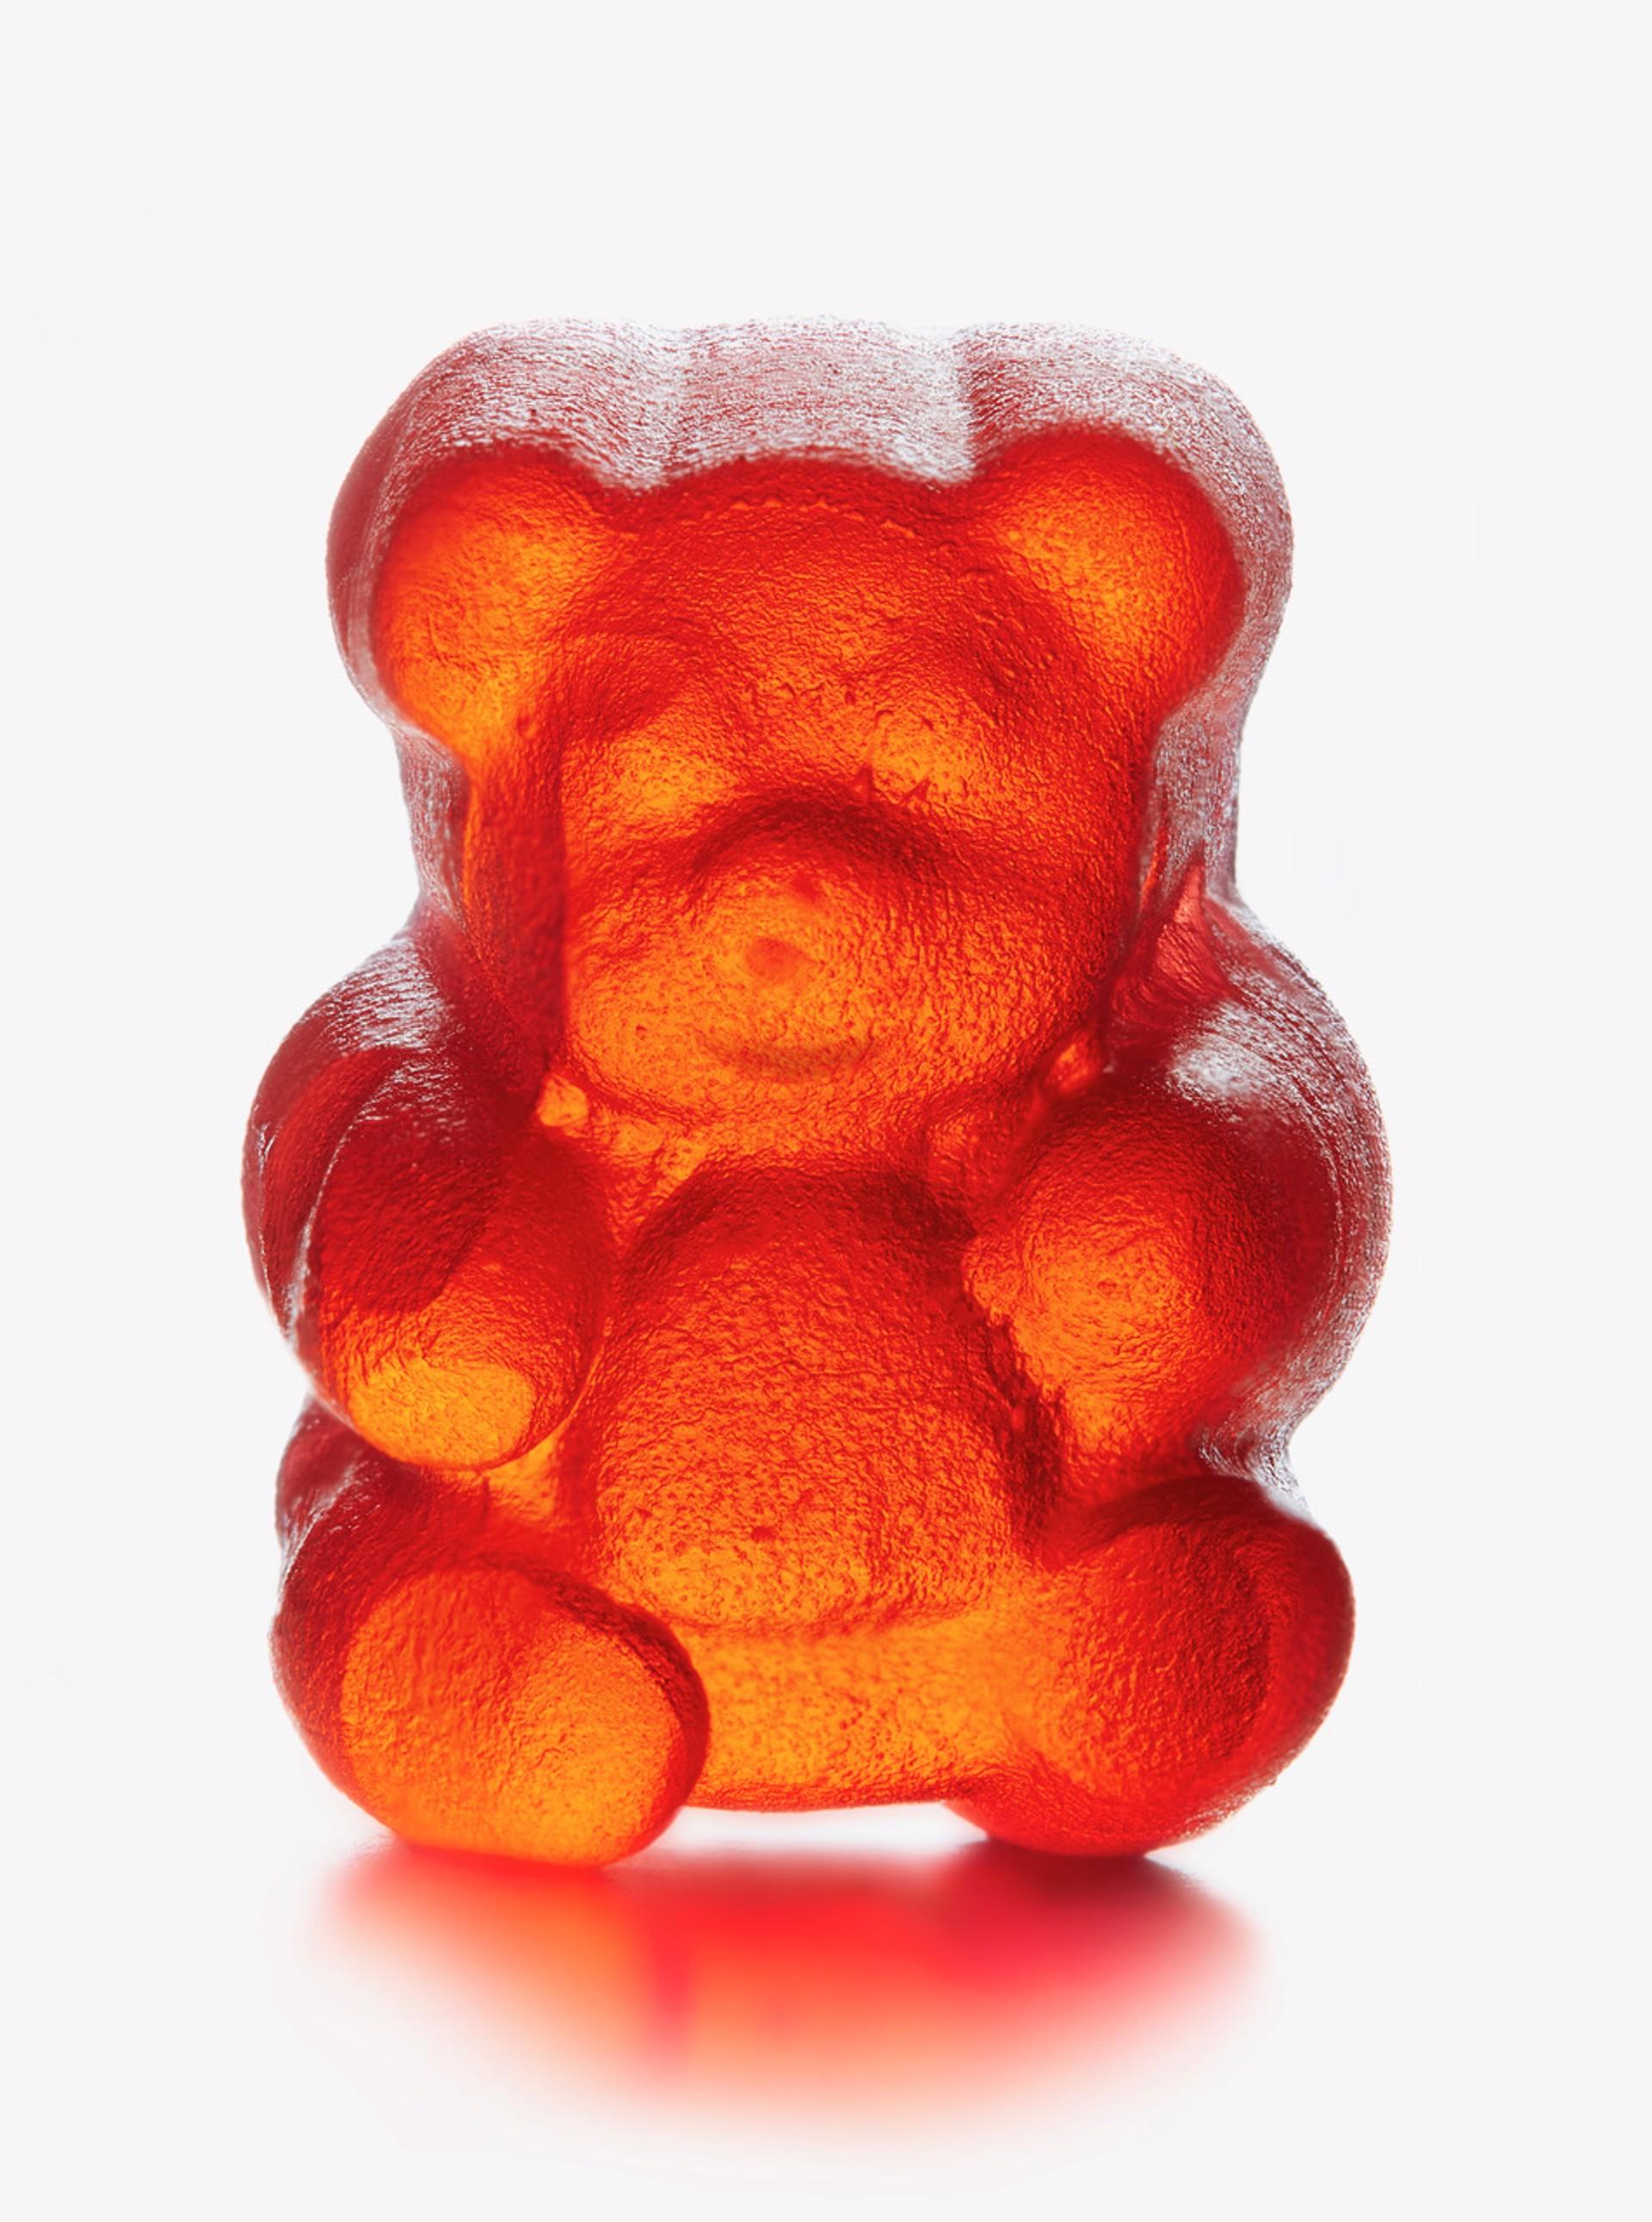 Peter Andrew Lusztyk Figurative Photograph - Gummy Bear Red (36" x 24")